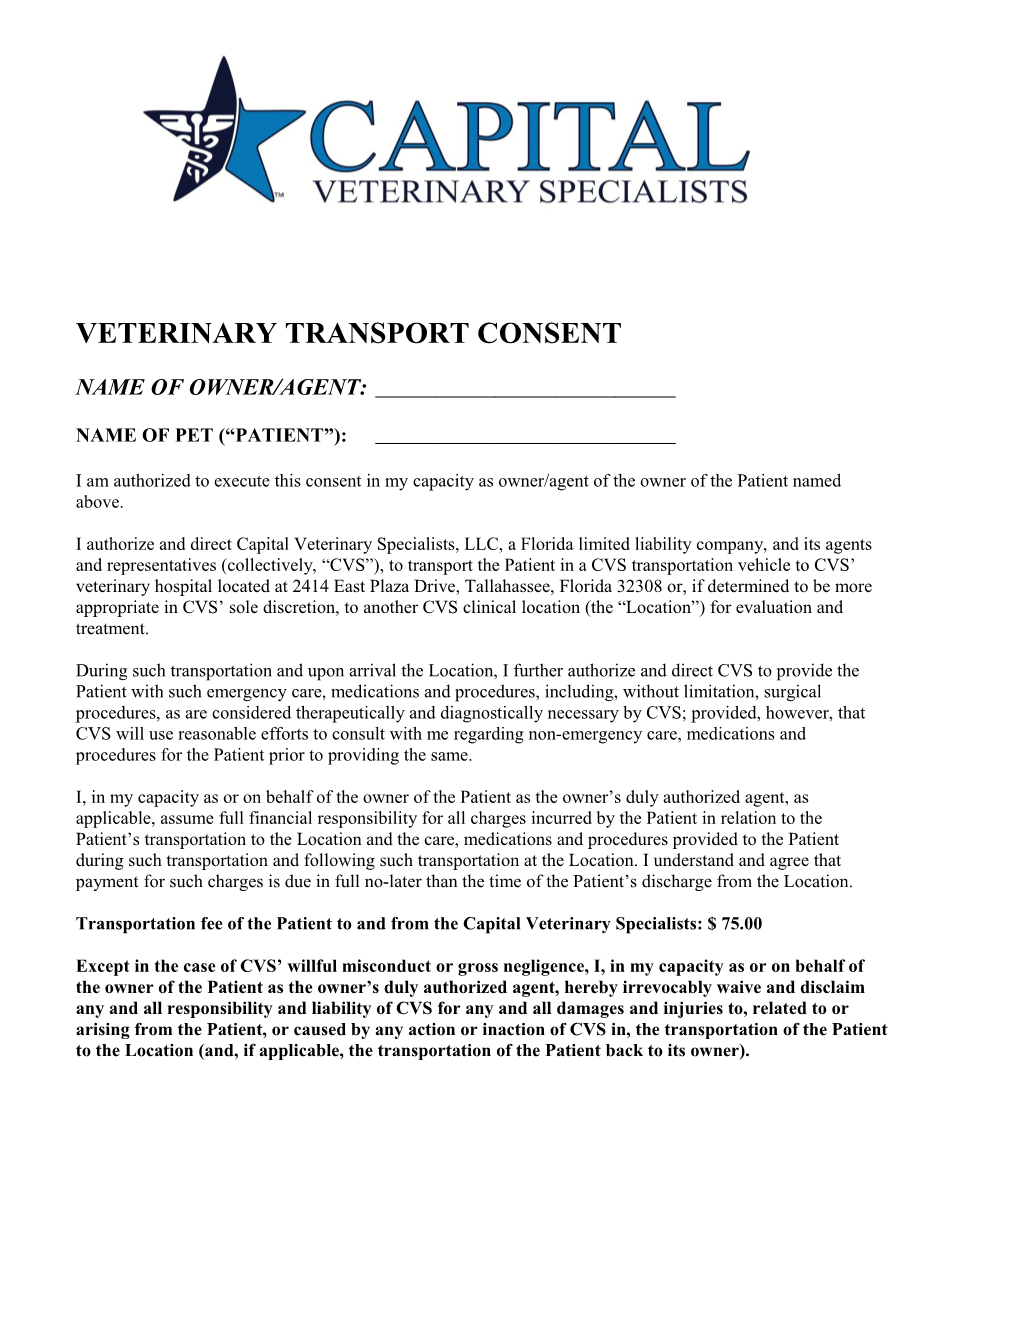 Veterinary Transport Consent